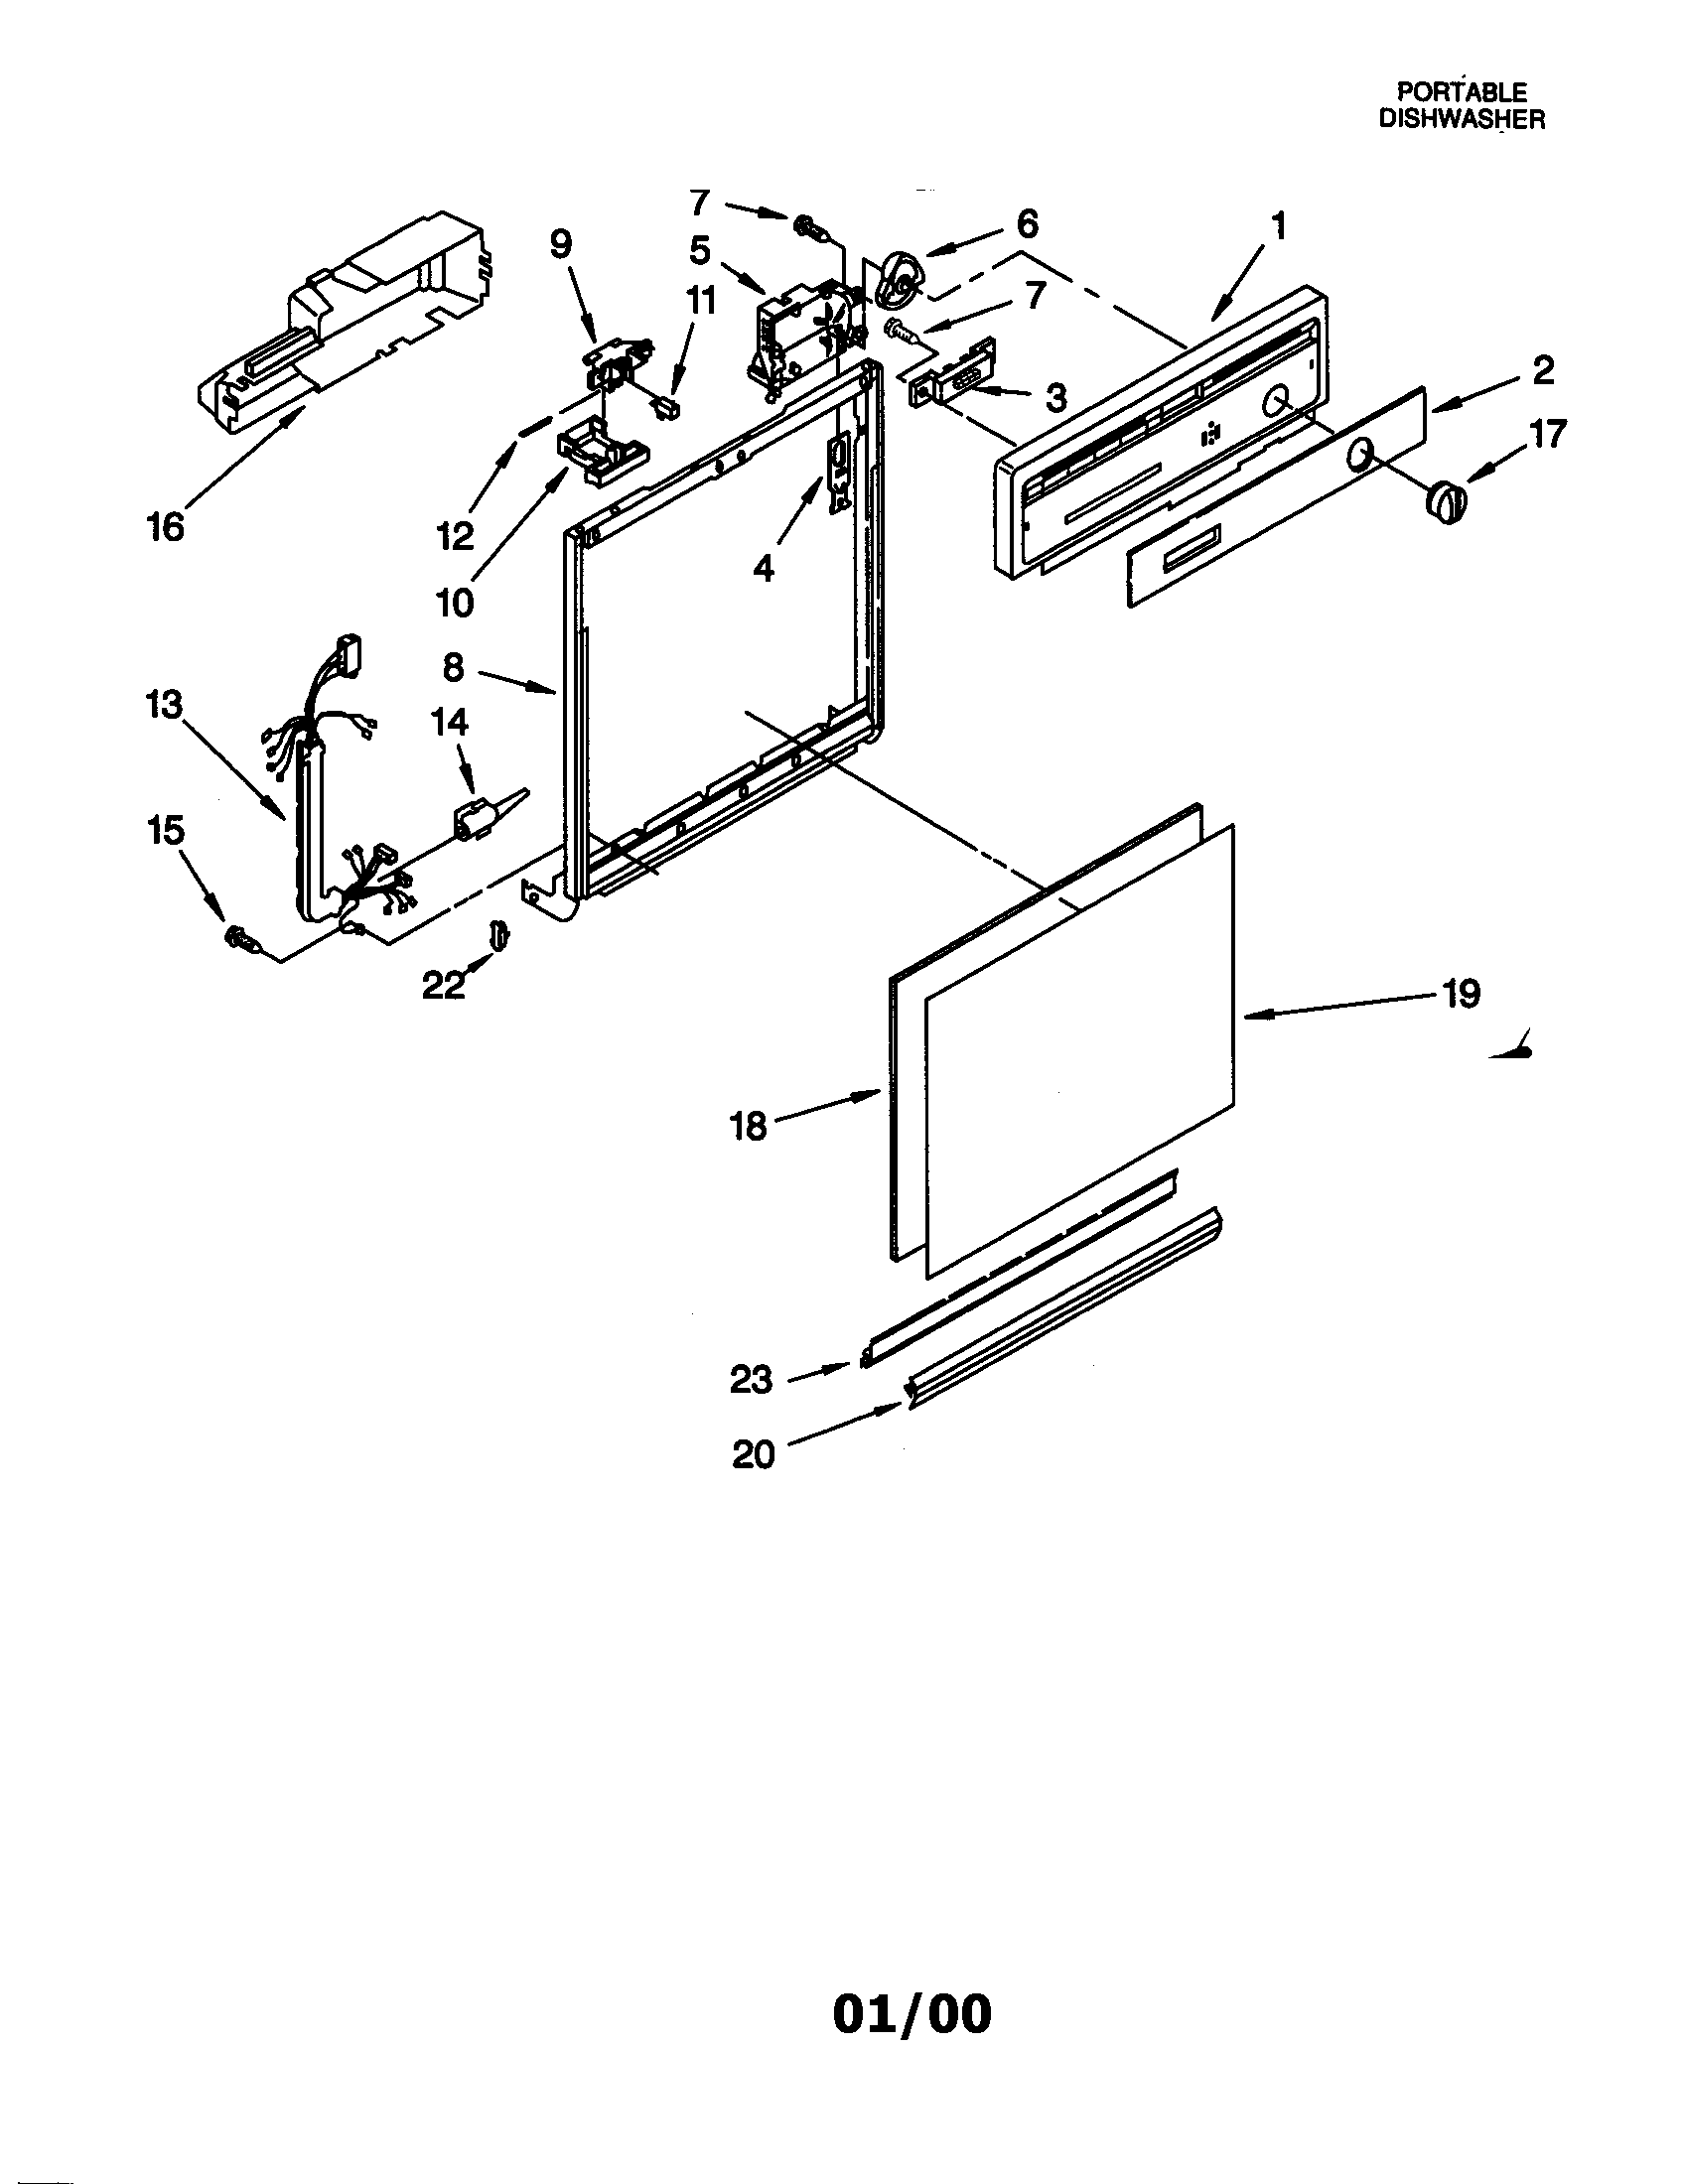 Whirlpool Portable Dishwasher Parts